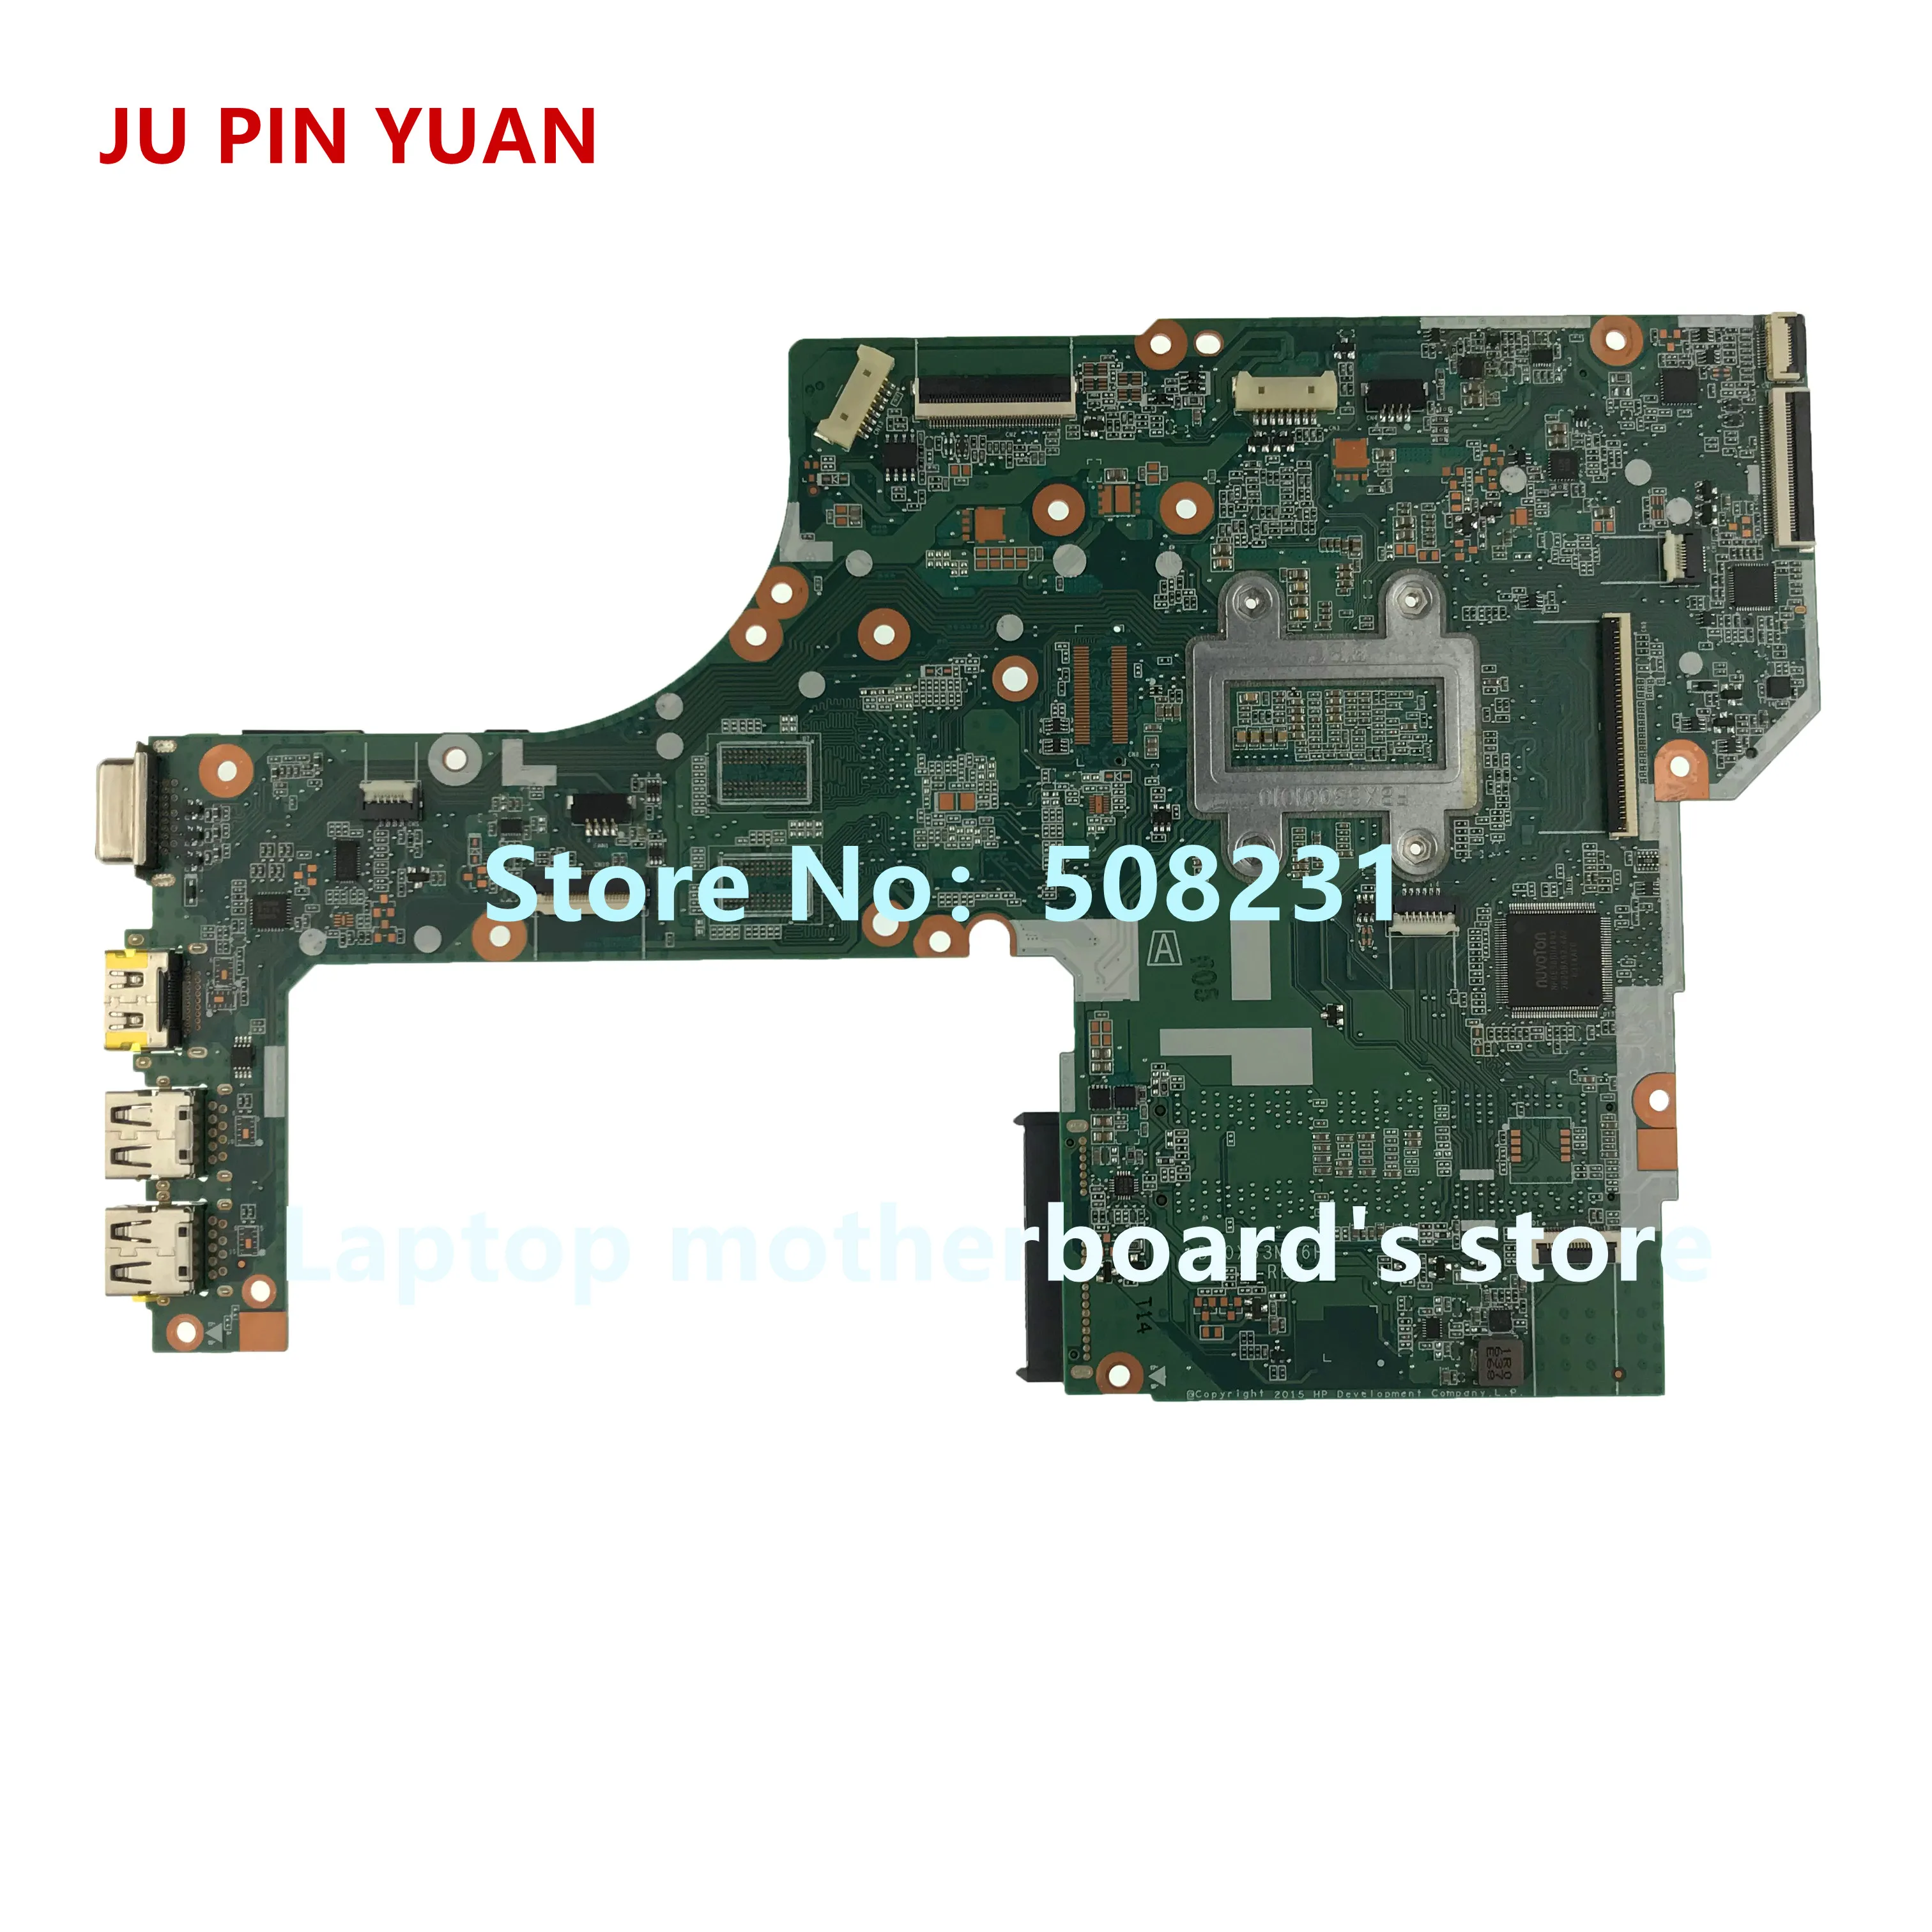 Ju pin yuan L01039-001 L01039-601 DA0X8BMB6F0 материнская плата для ноутбука hp ProBook 430 G5 440 G5 Тетрадь ПК I5-8250U полностью протестирована